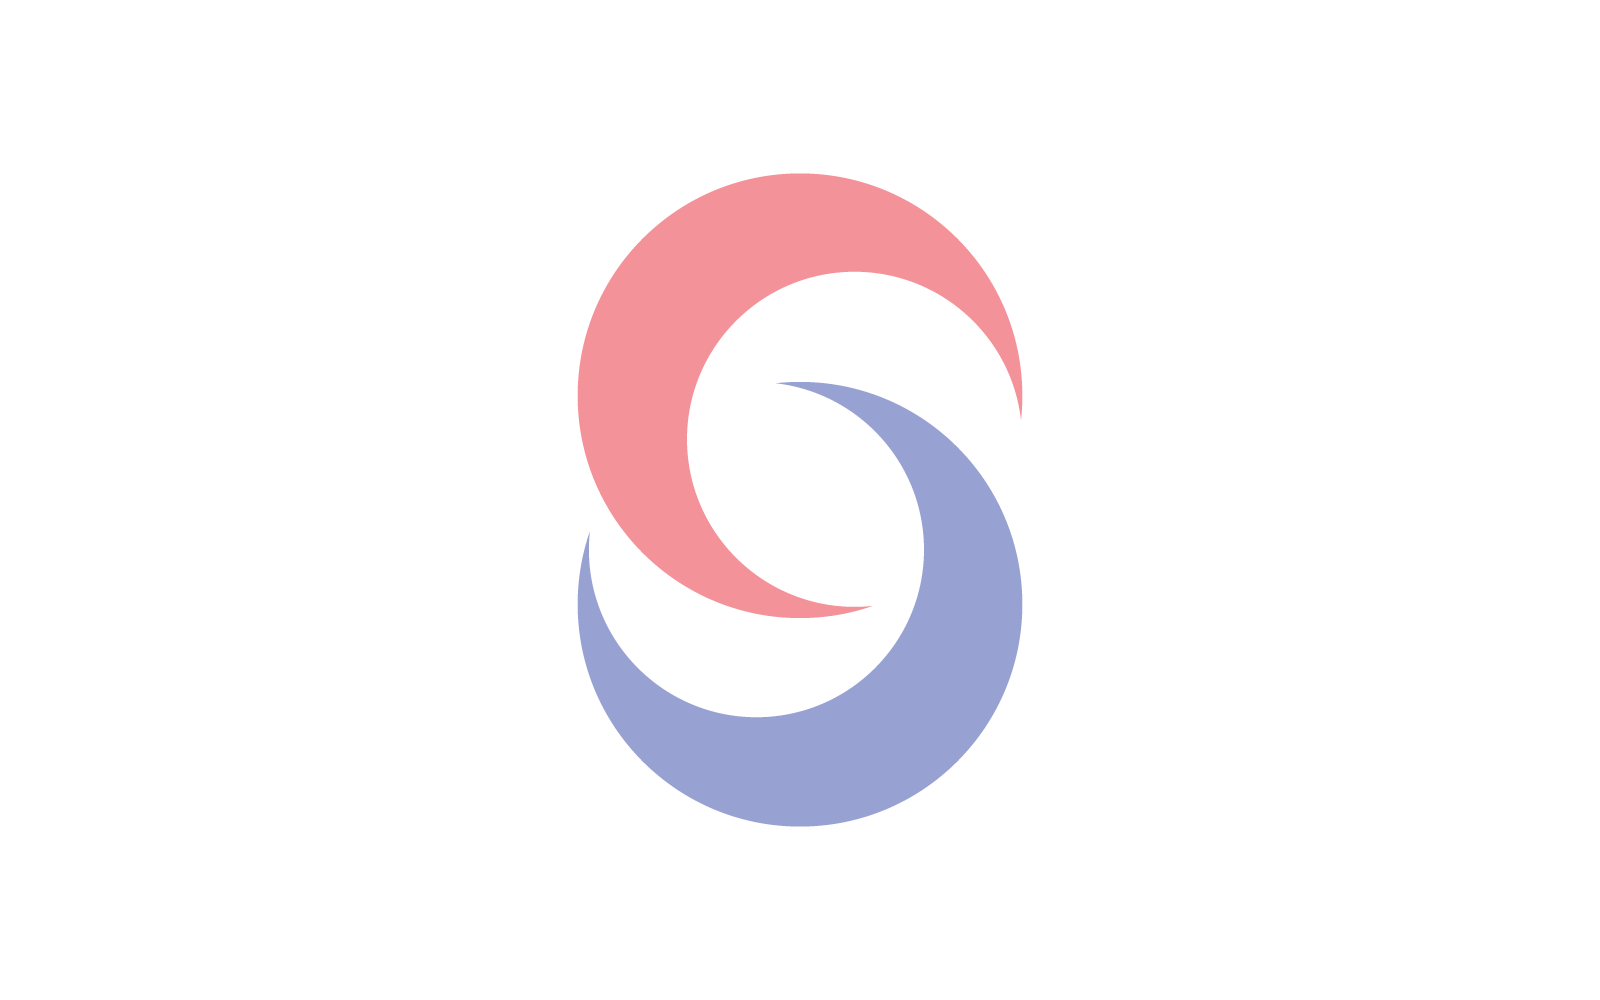 S letter logo icon flat design vector